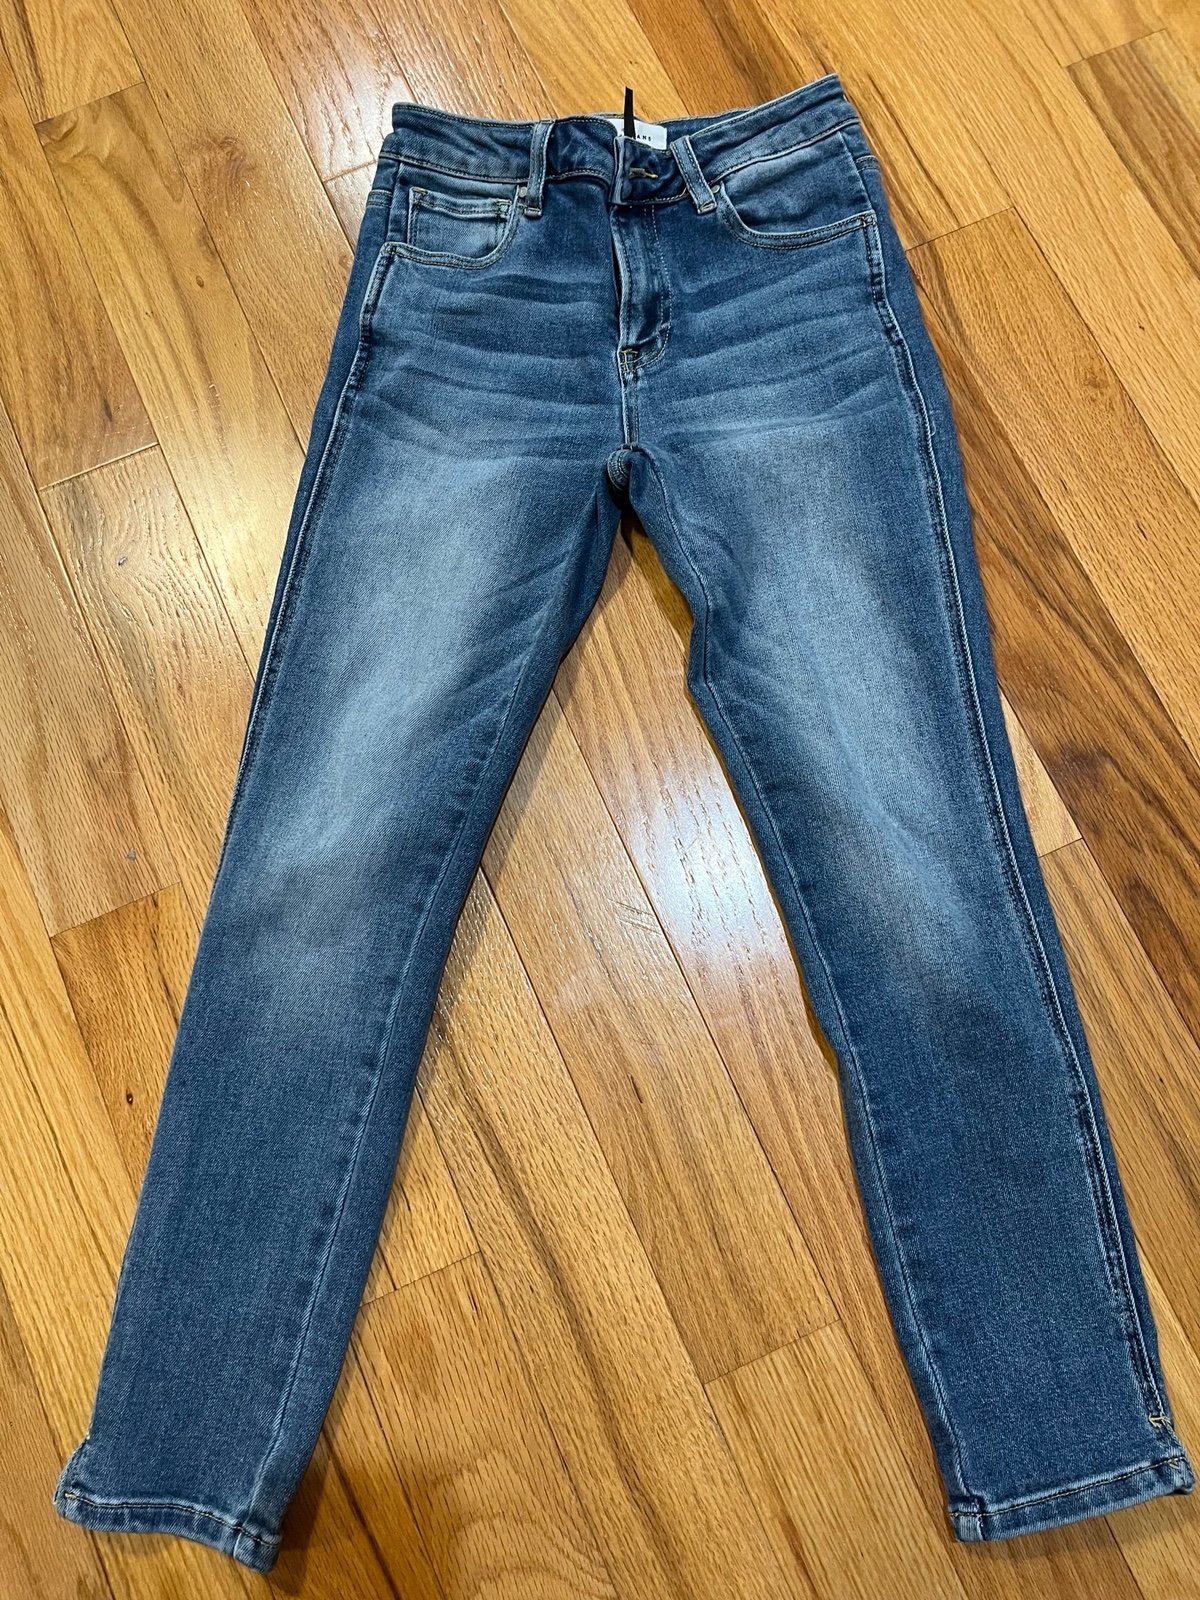 Great Risen skinny jeans I66IhsU1G on sale